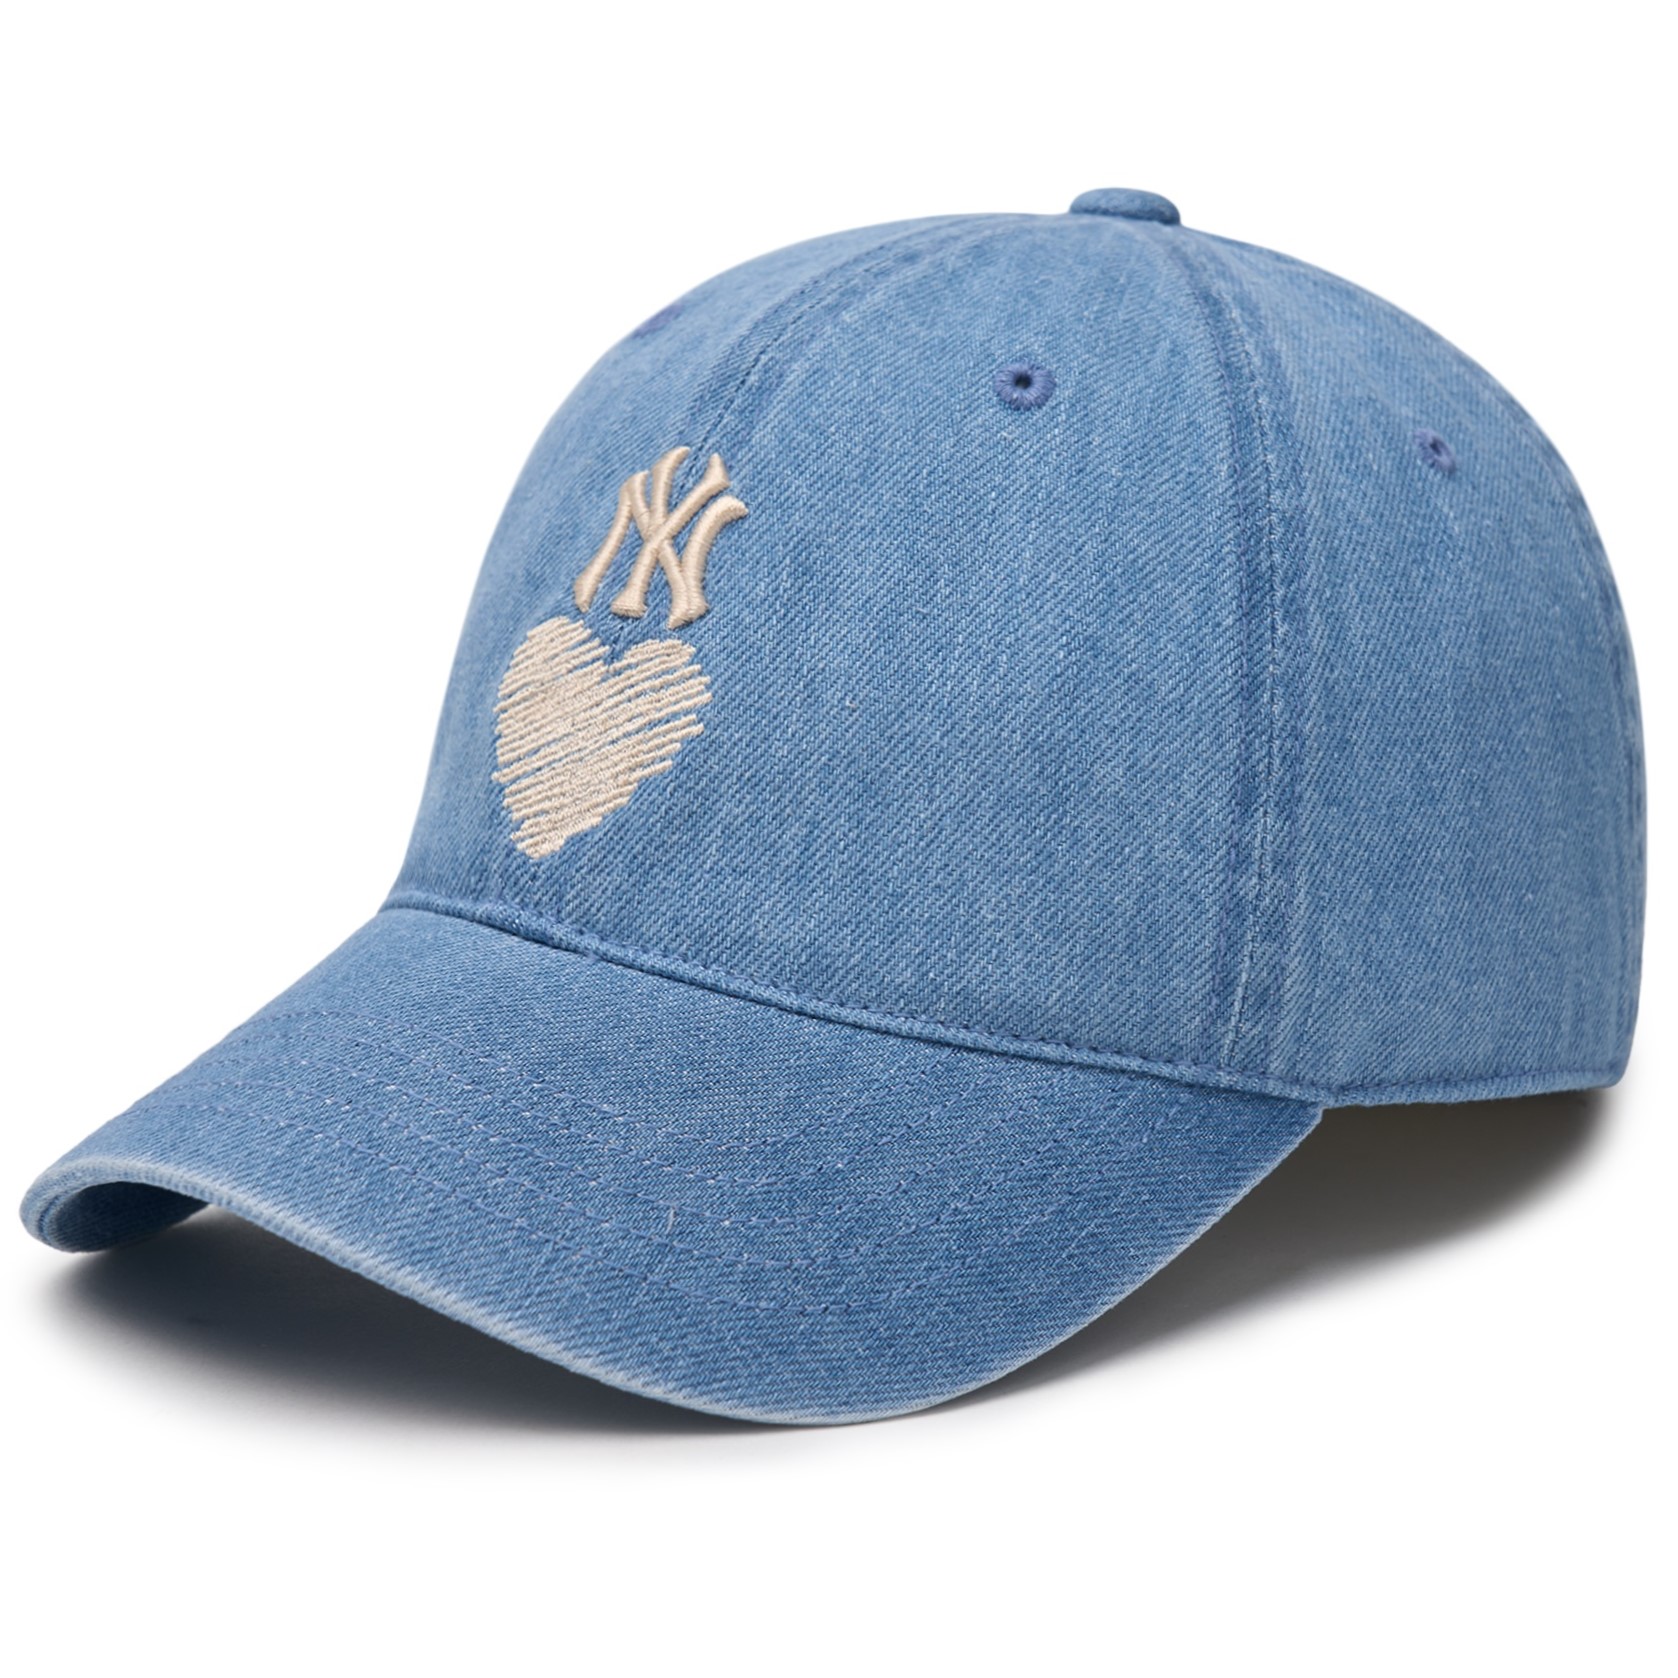 NÓN KẾT MLB NY BLUE DENIM HEART UNSTRUCTURED BALL CAP NEW YORK YANKEES 3ACPH024N-50BLL 6